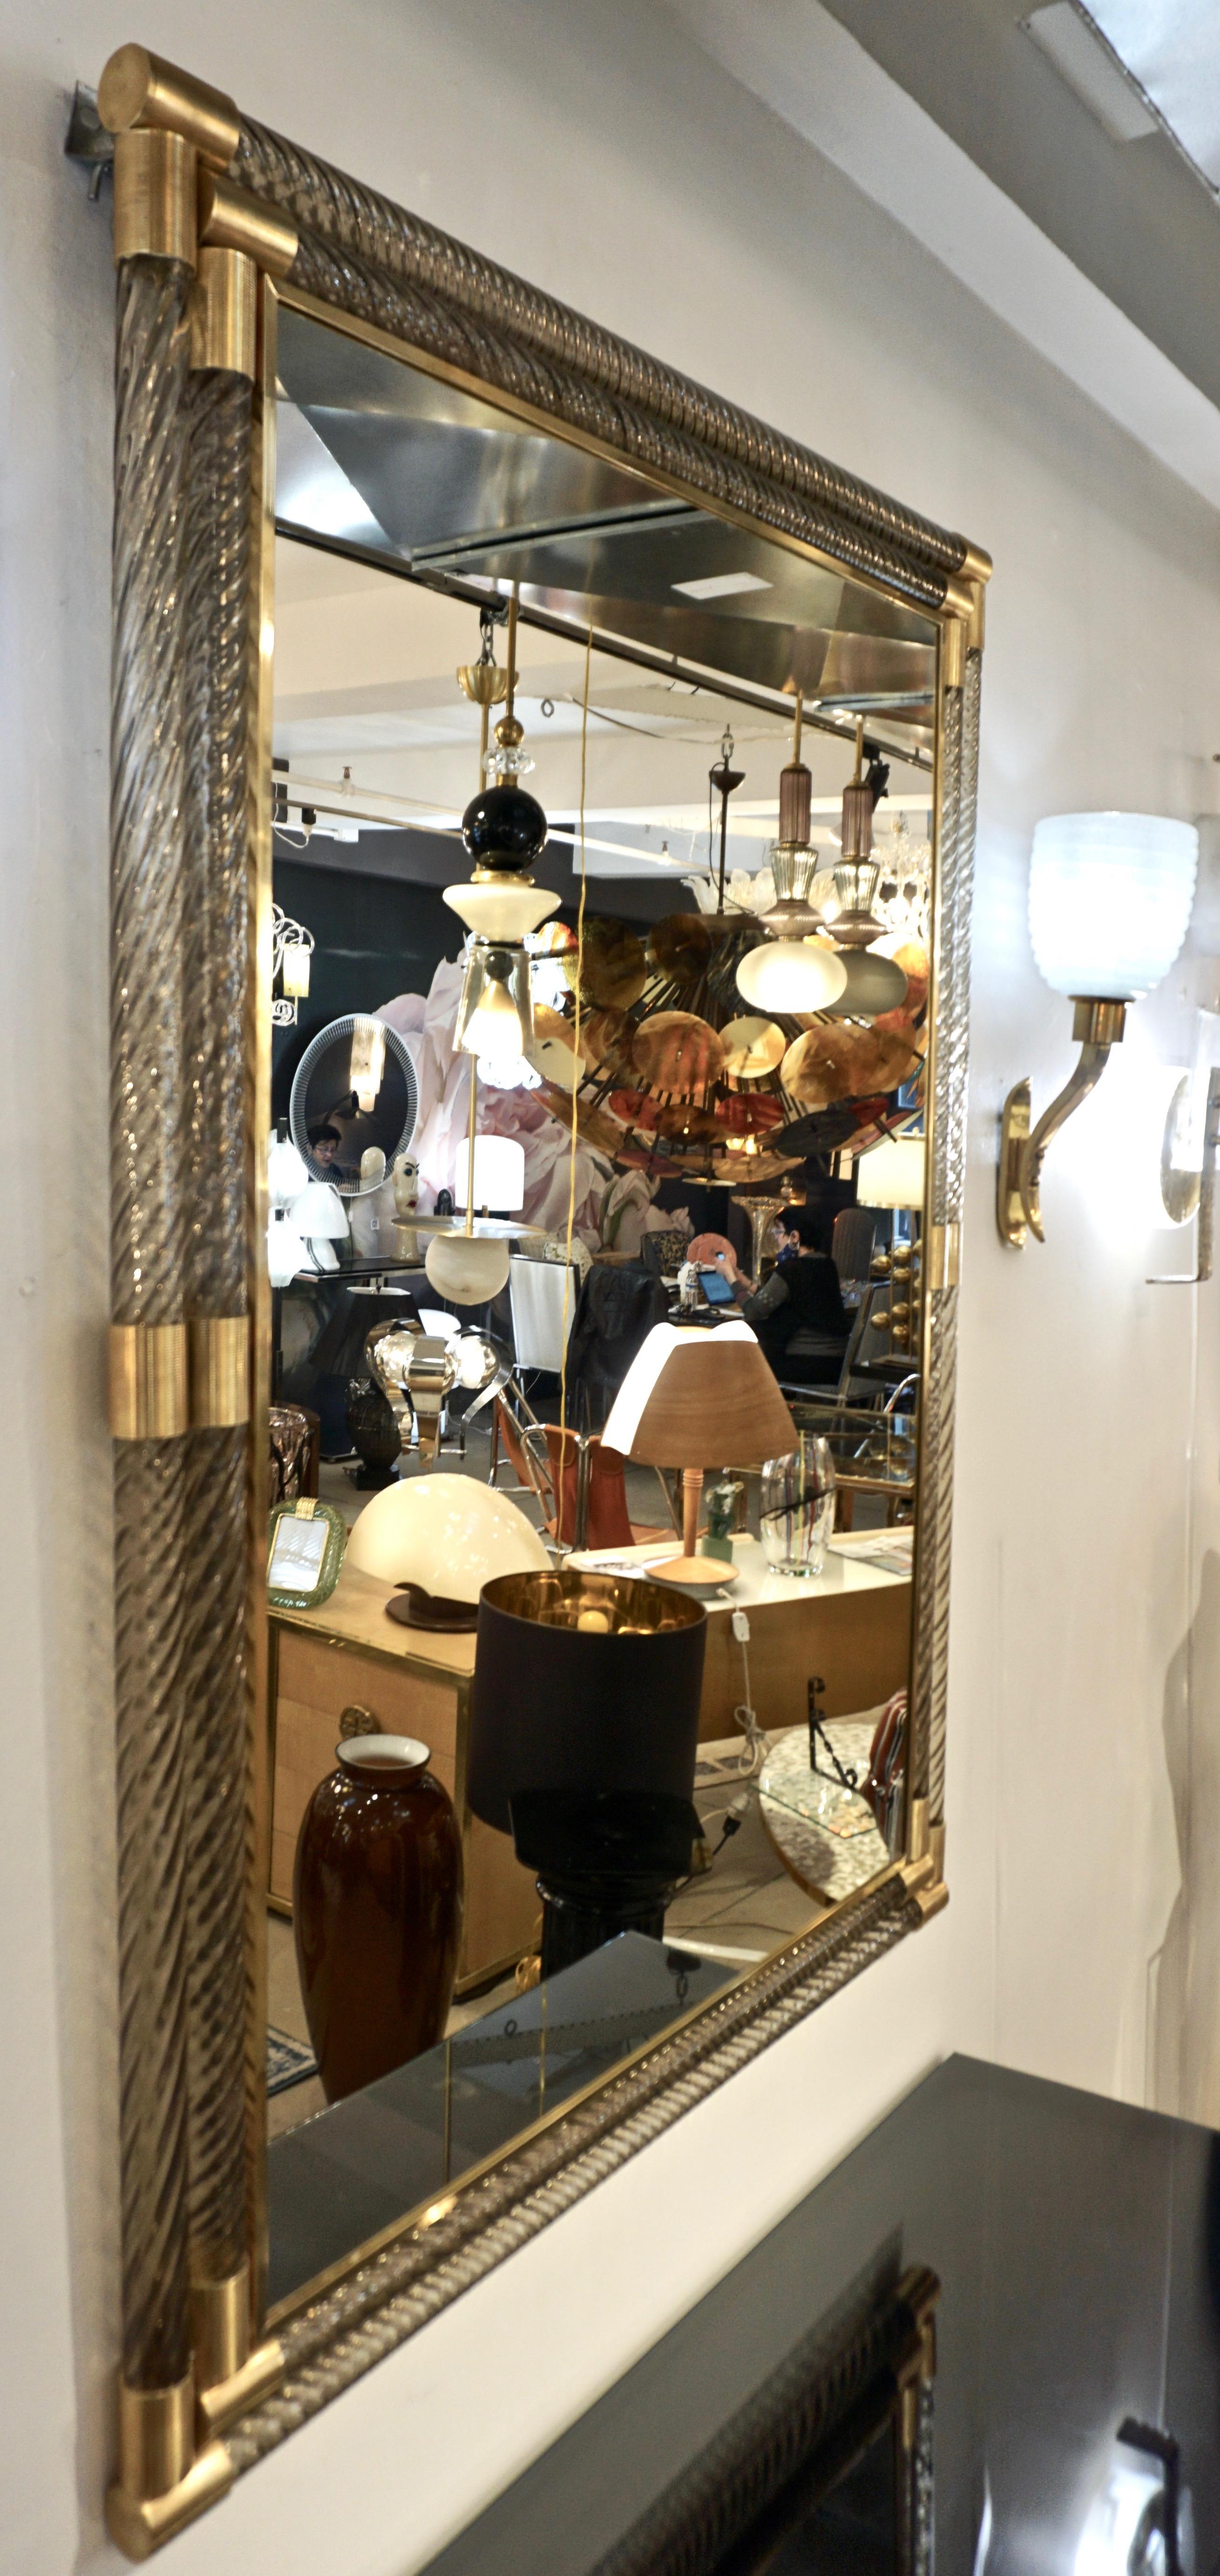 Contemporary Italian Art Deco Design Twisted Gray Smoked Murano Glass & Gold Brass Mirror For Sale